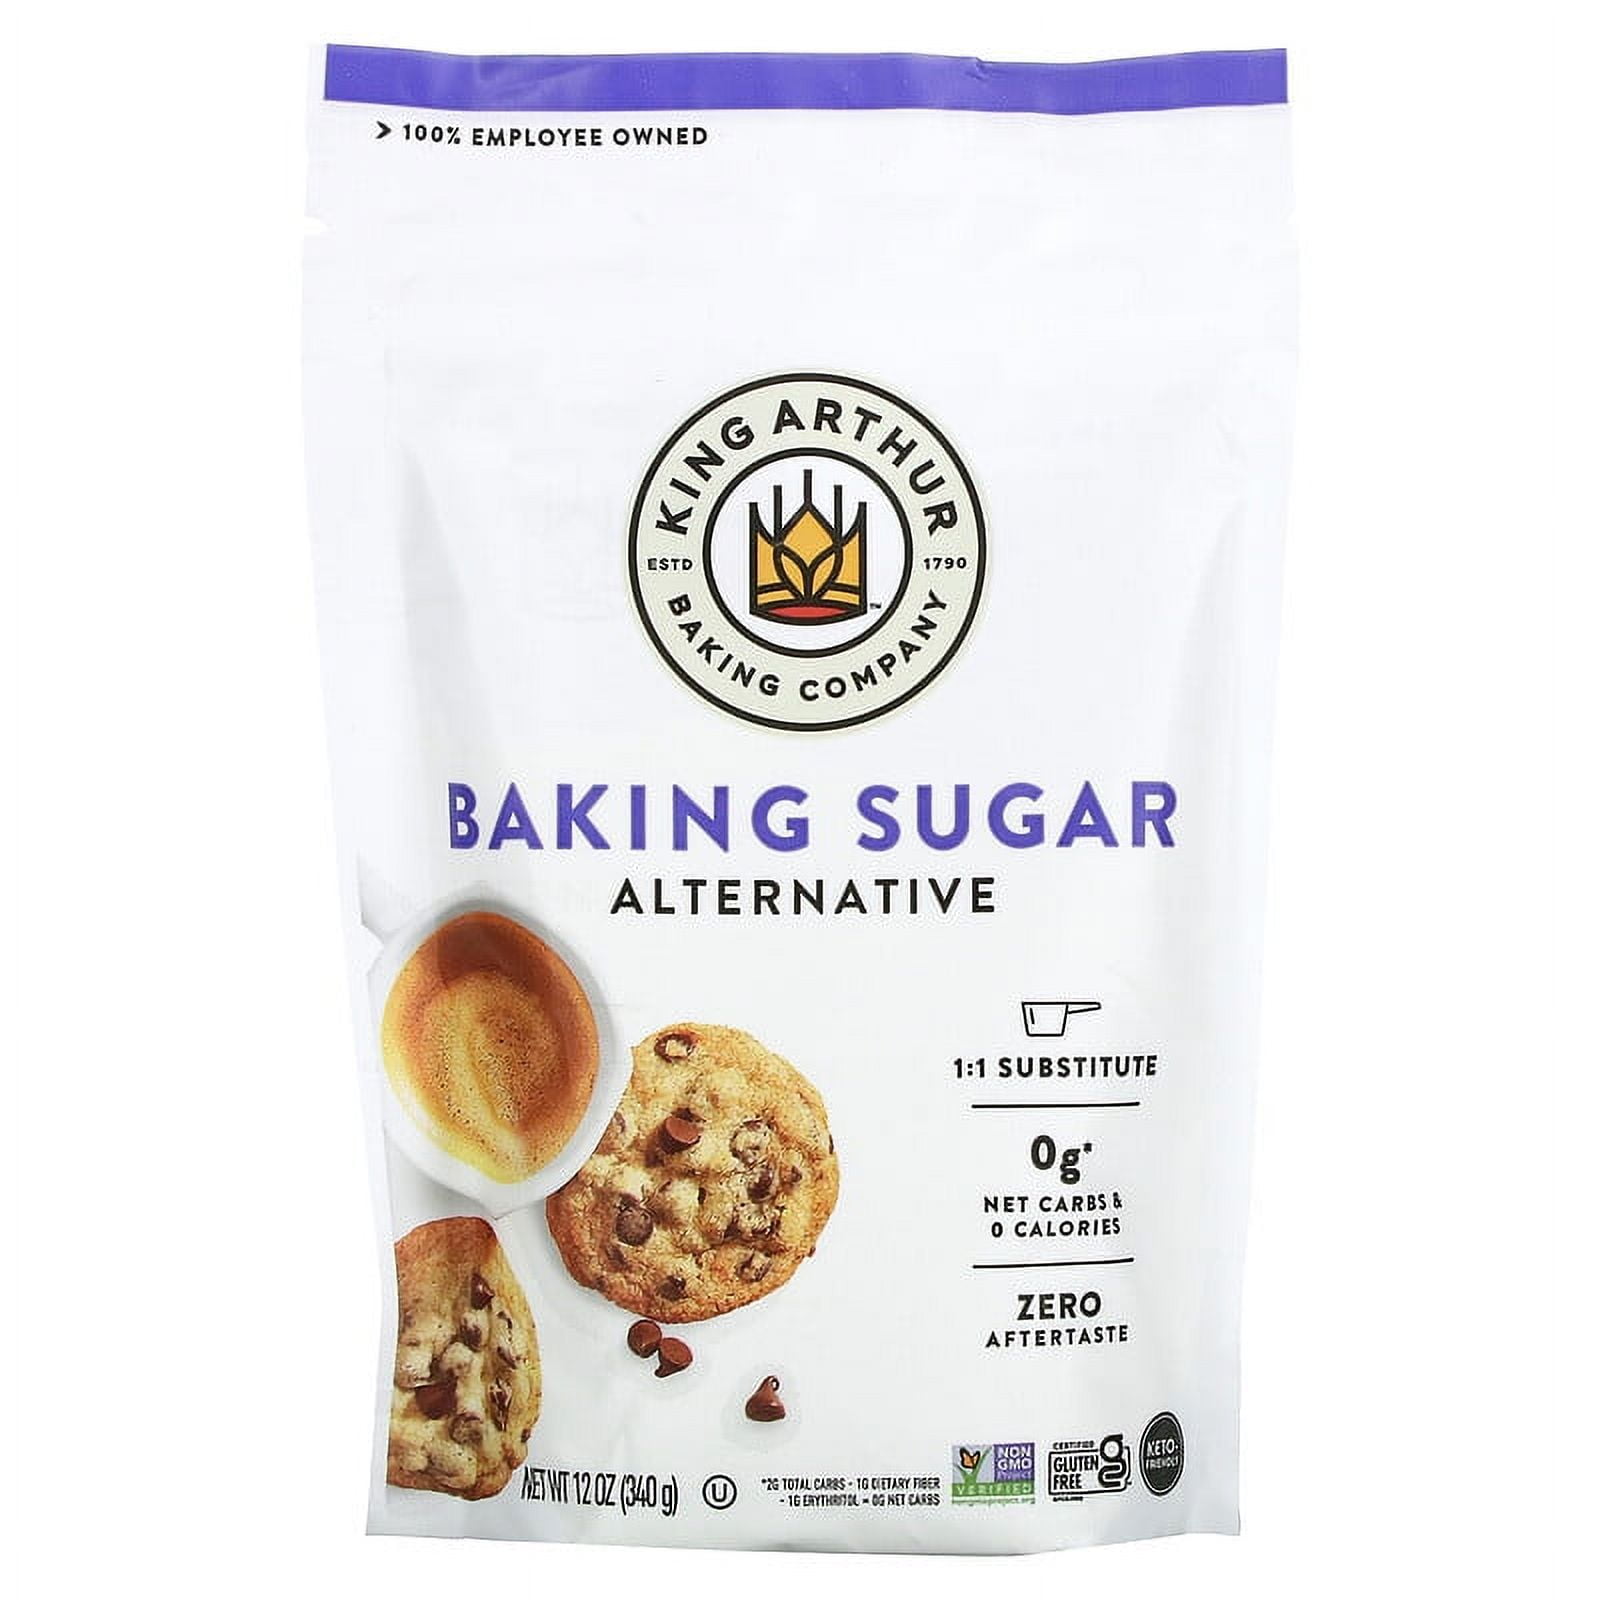 King Arthur Baking Sugar Alternative, 12oz 